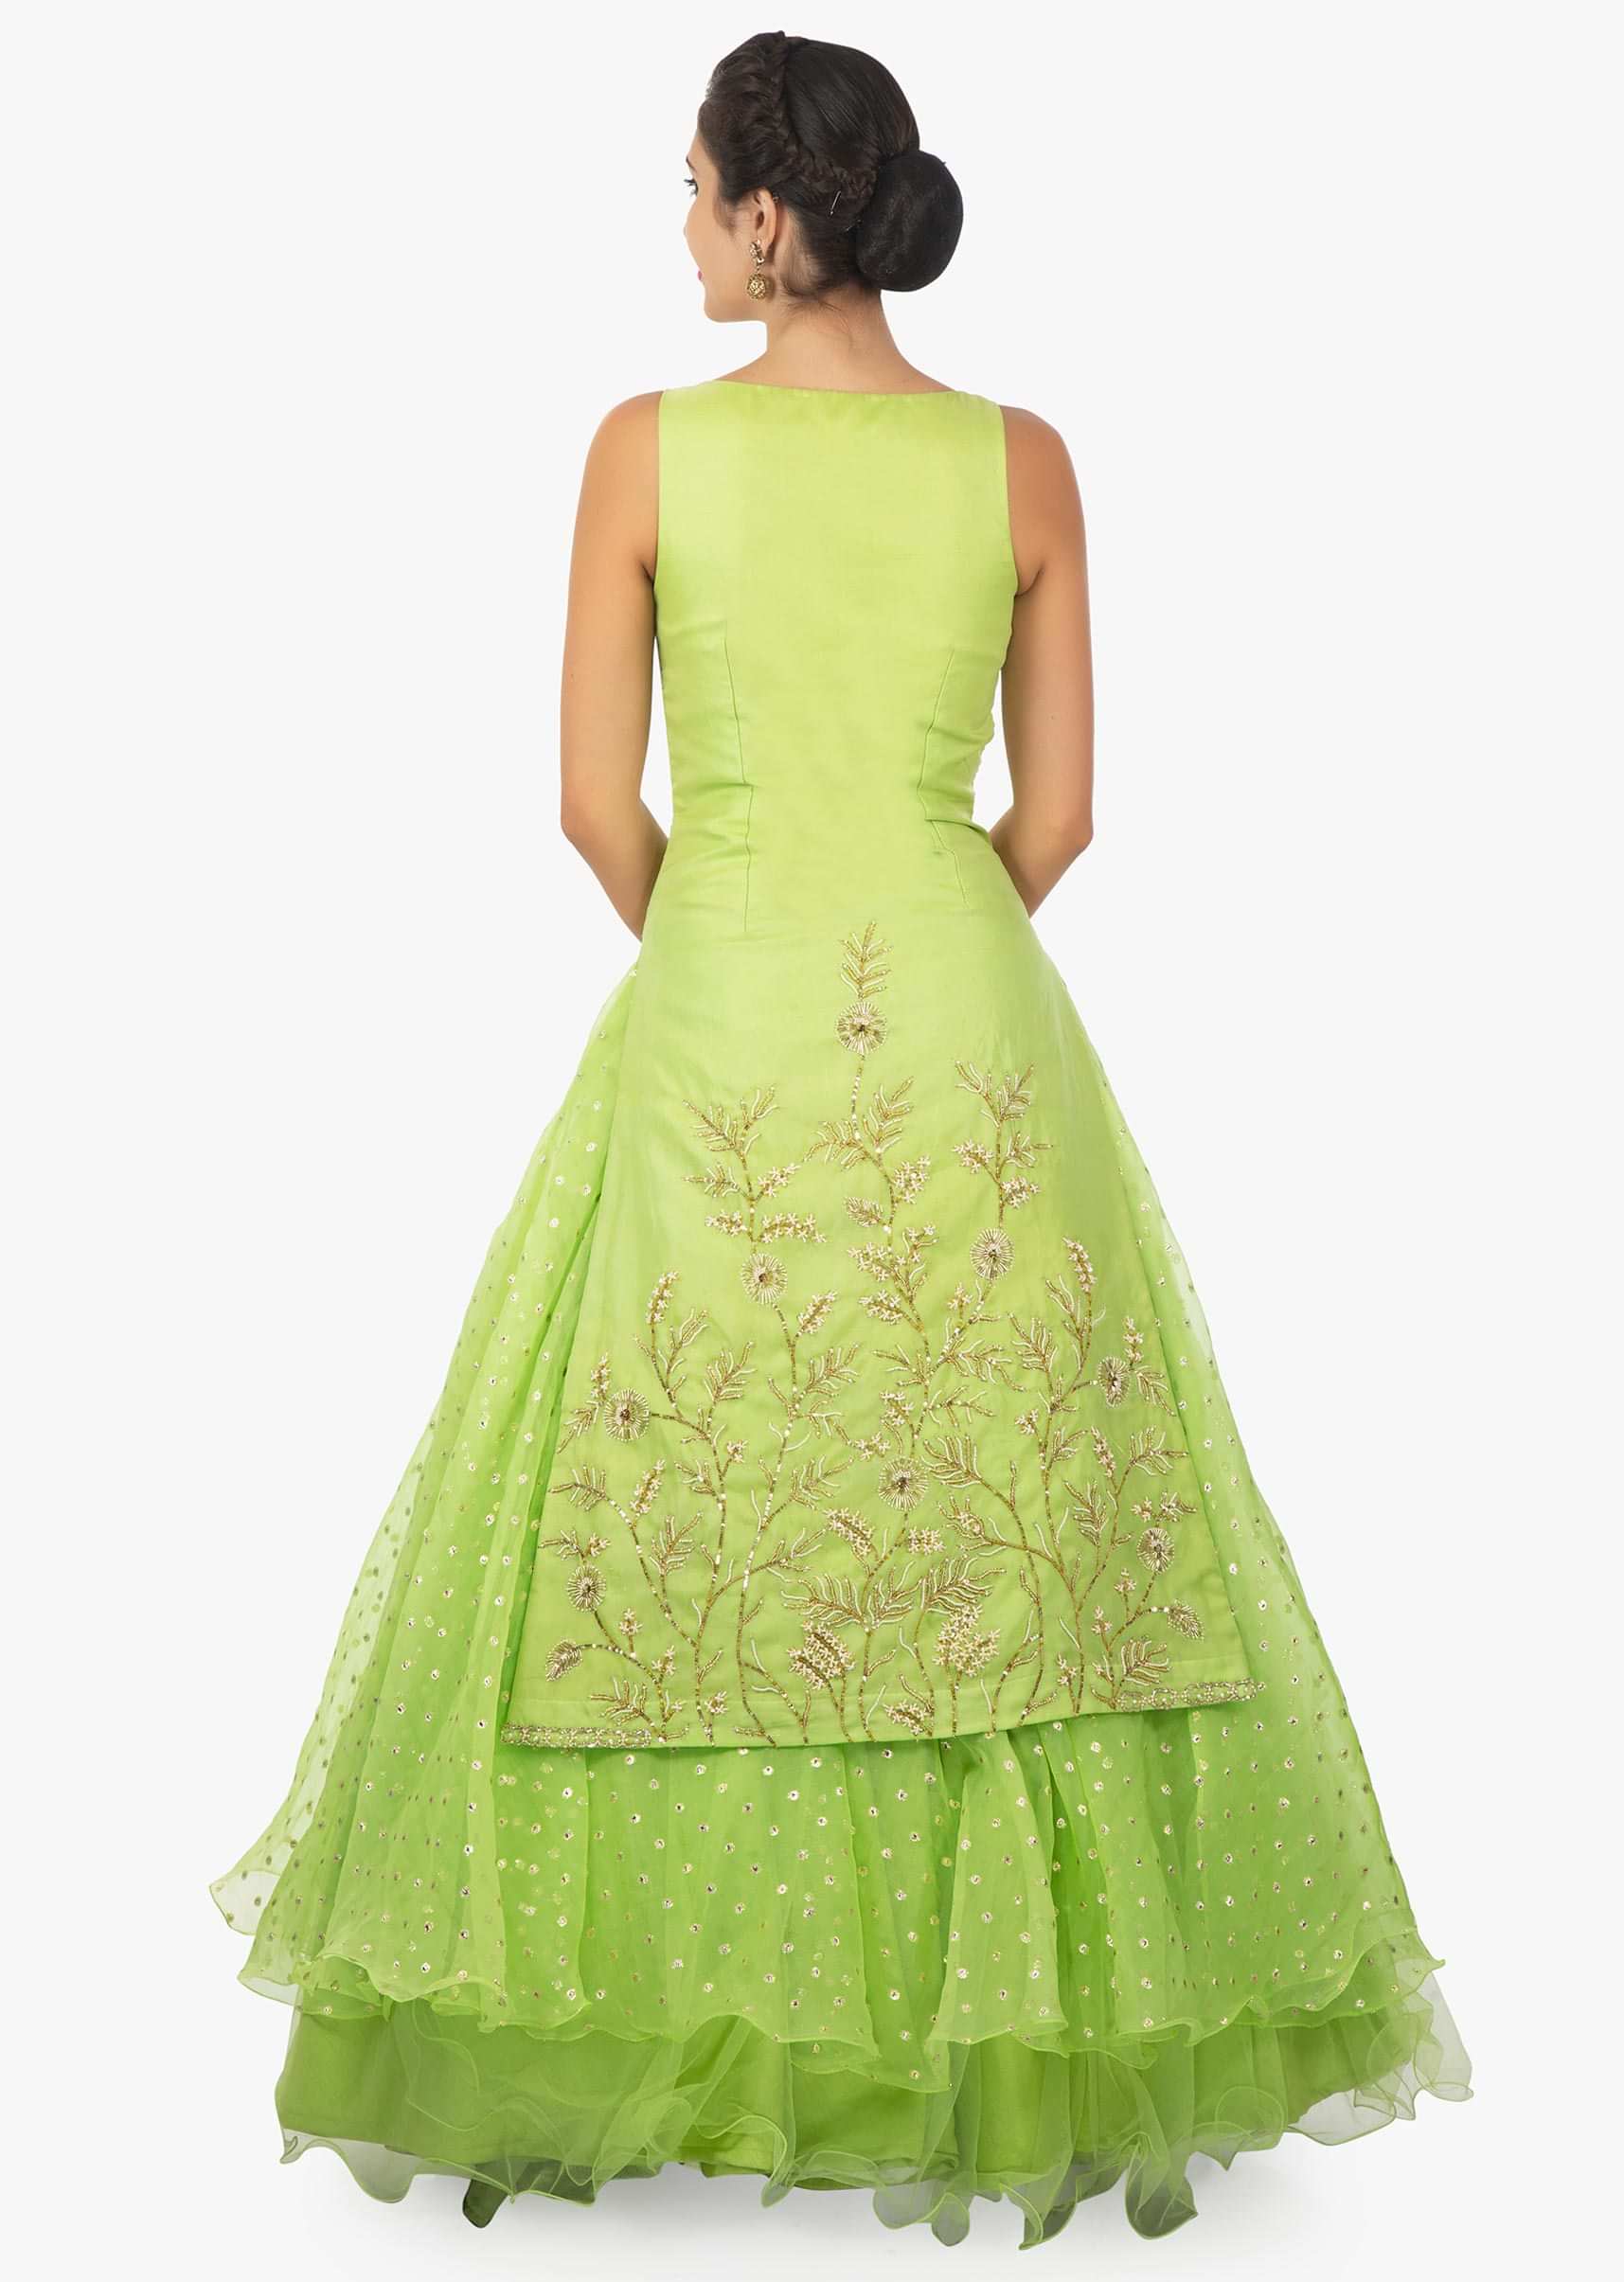 Parrot Green Lehenga In Chanderi Silk With Organza Silk Long Kurti Online - Kalki Fashion